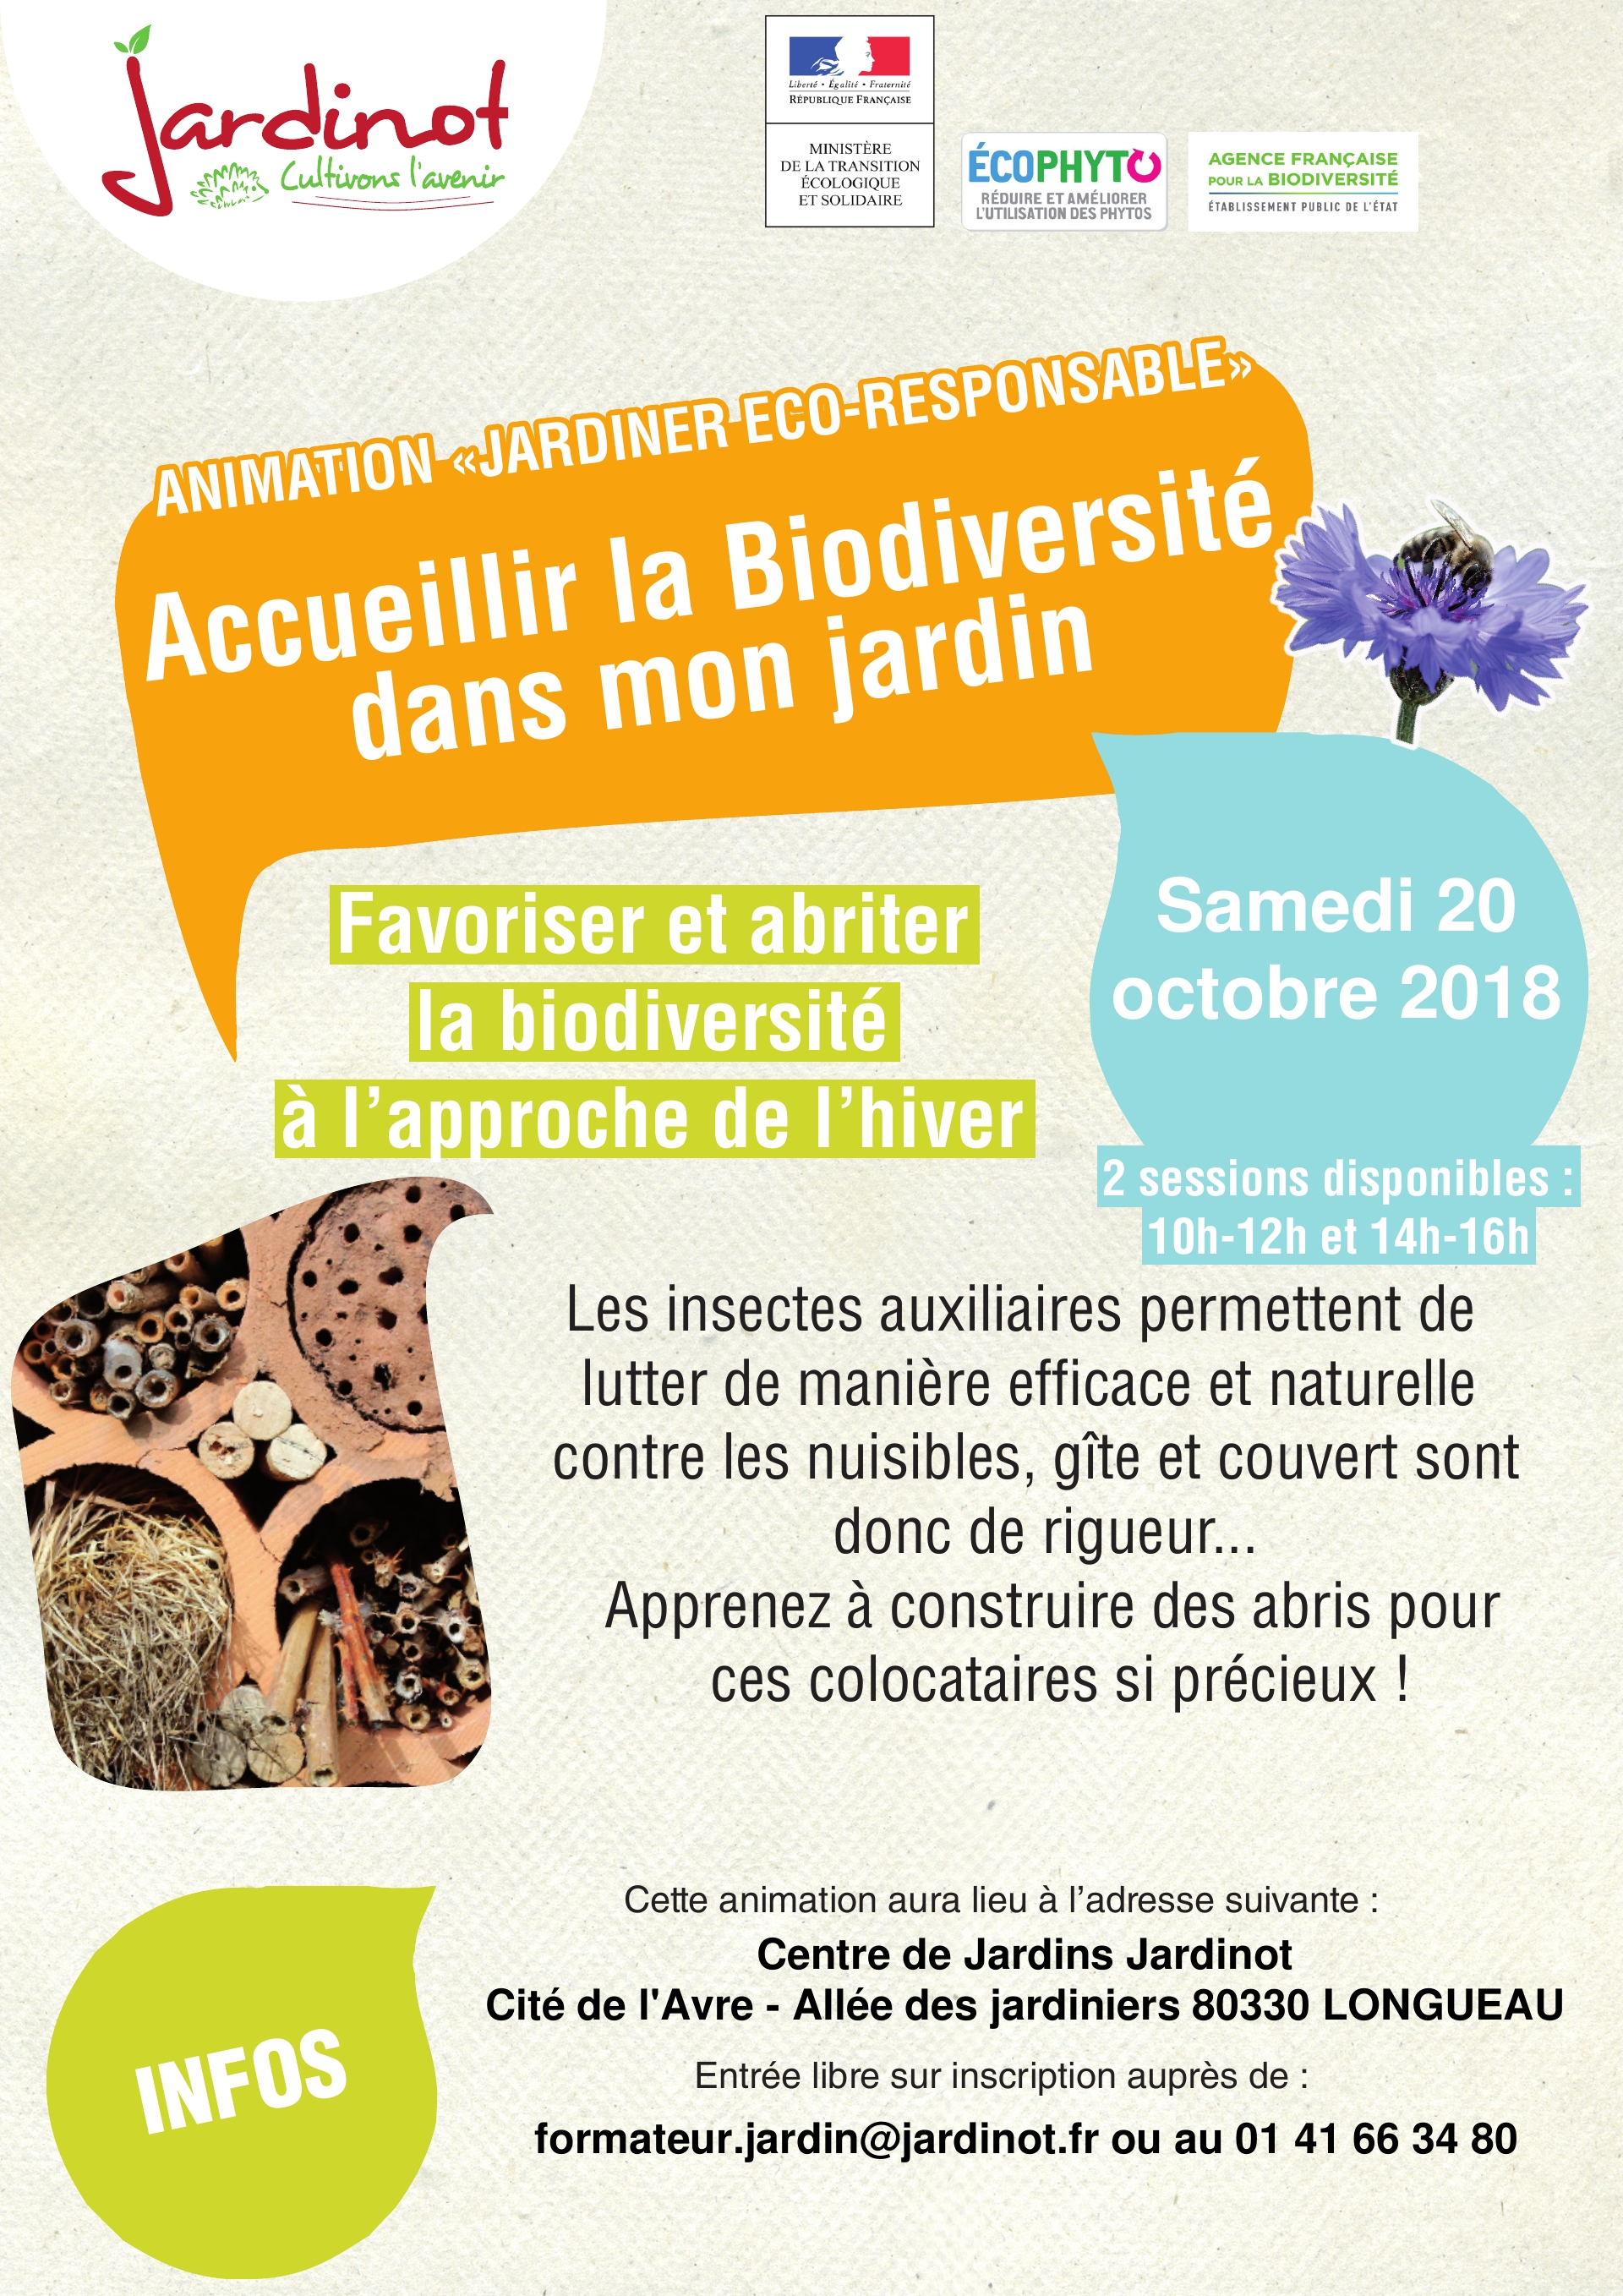 animation Jardinot biodiversité